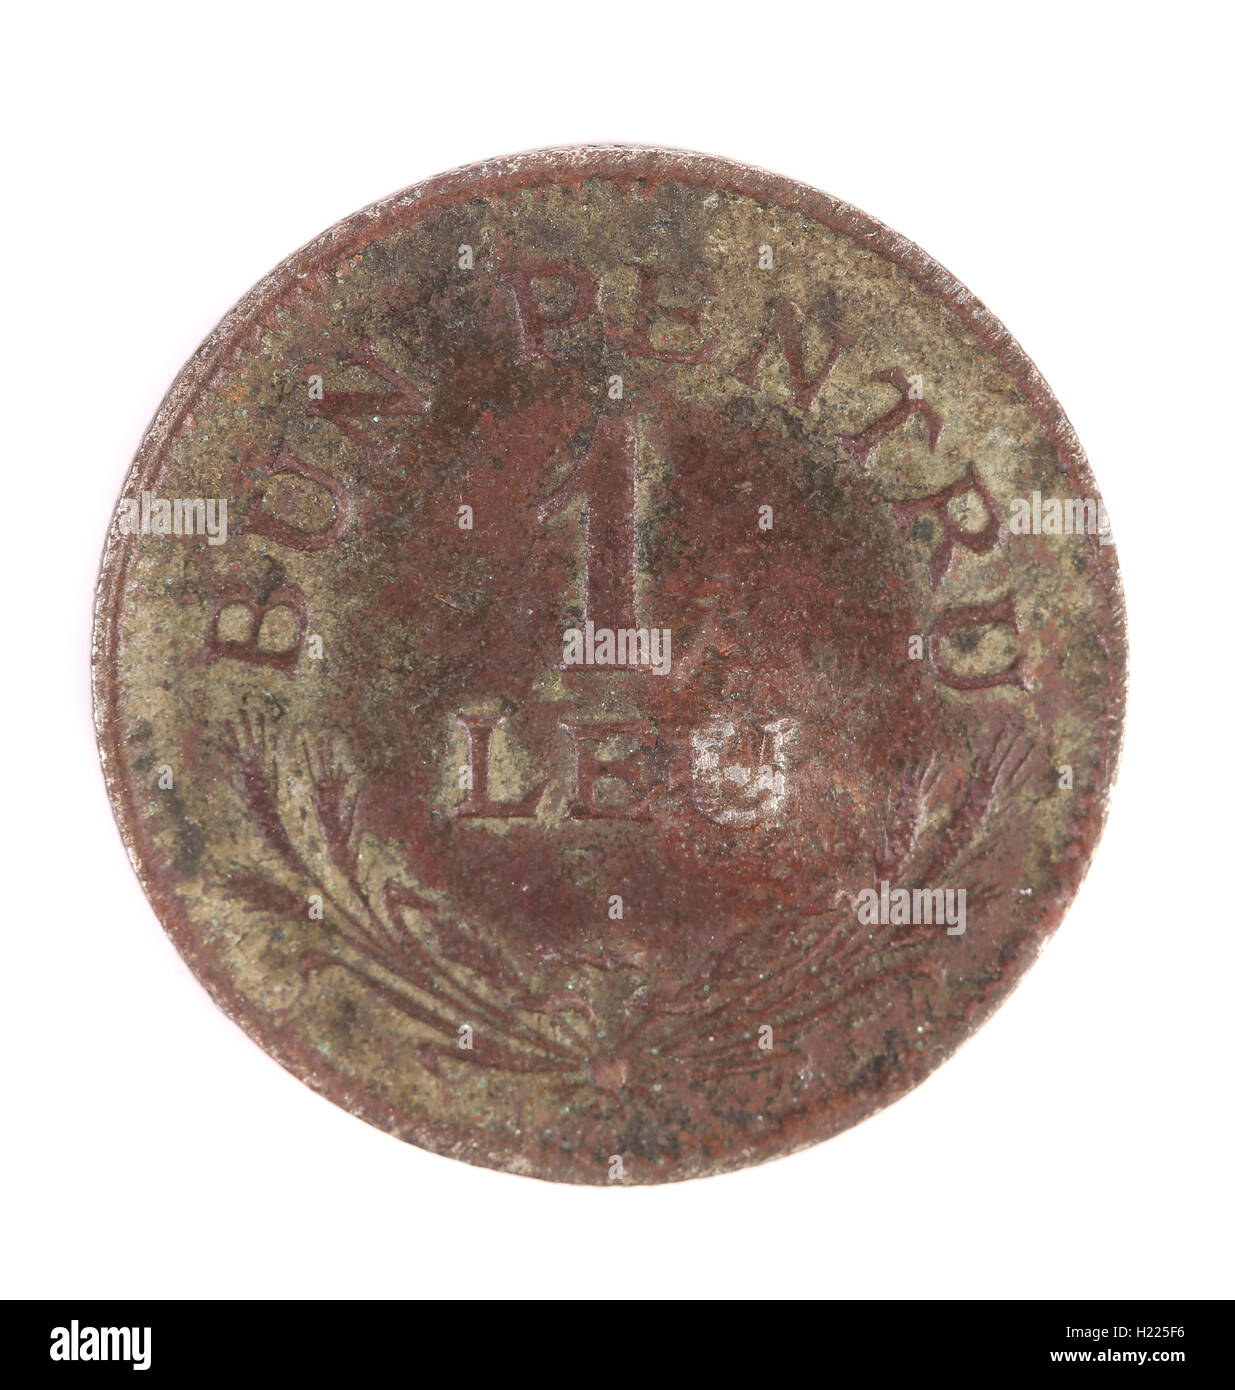 Bronze coins of 1 lei. Stock Photo